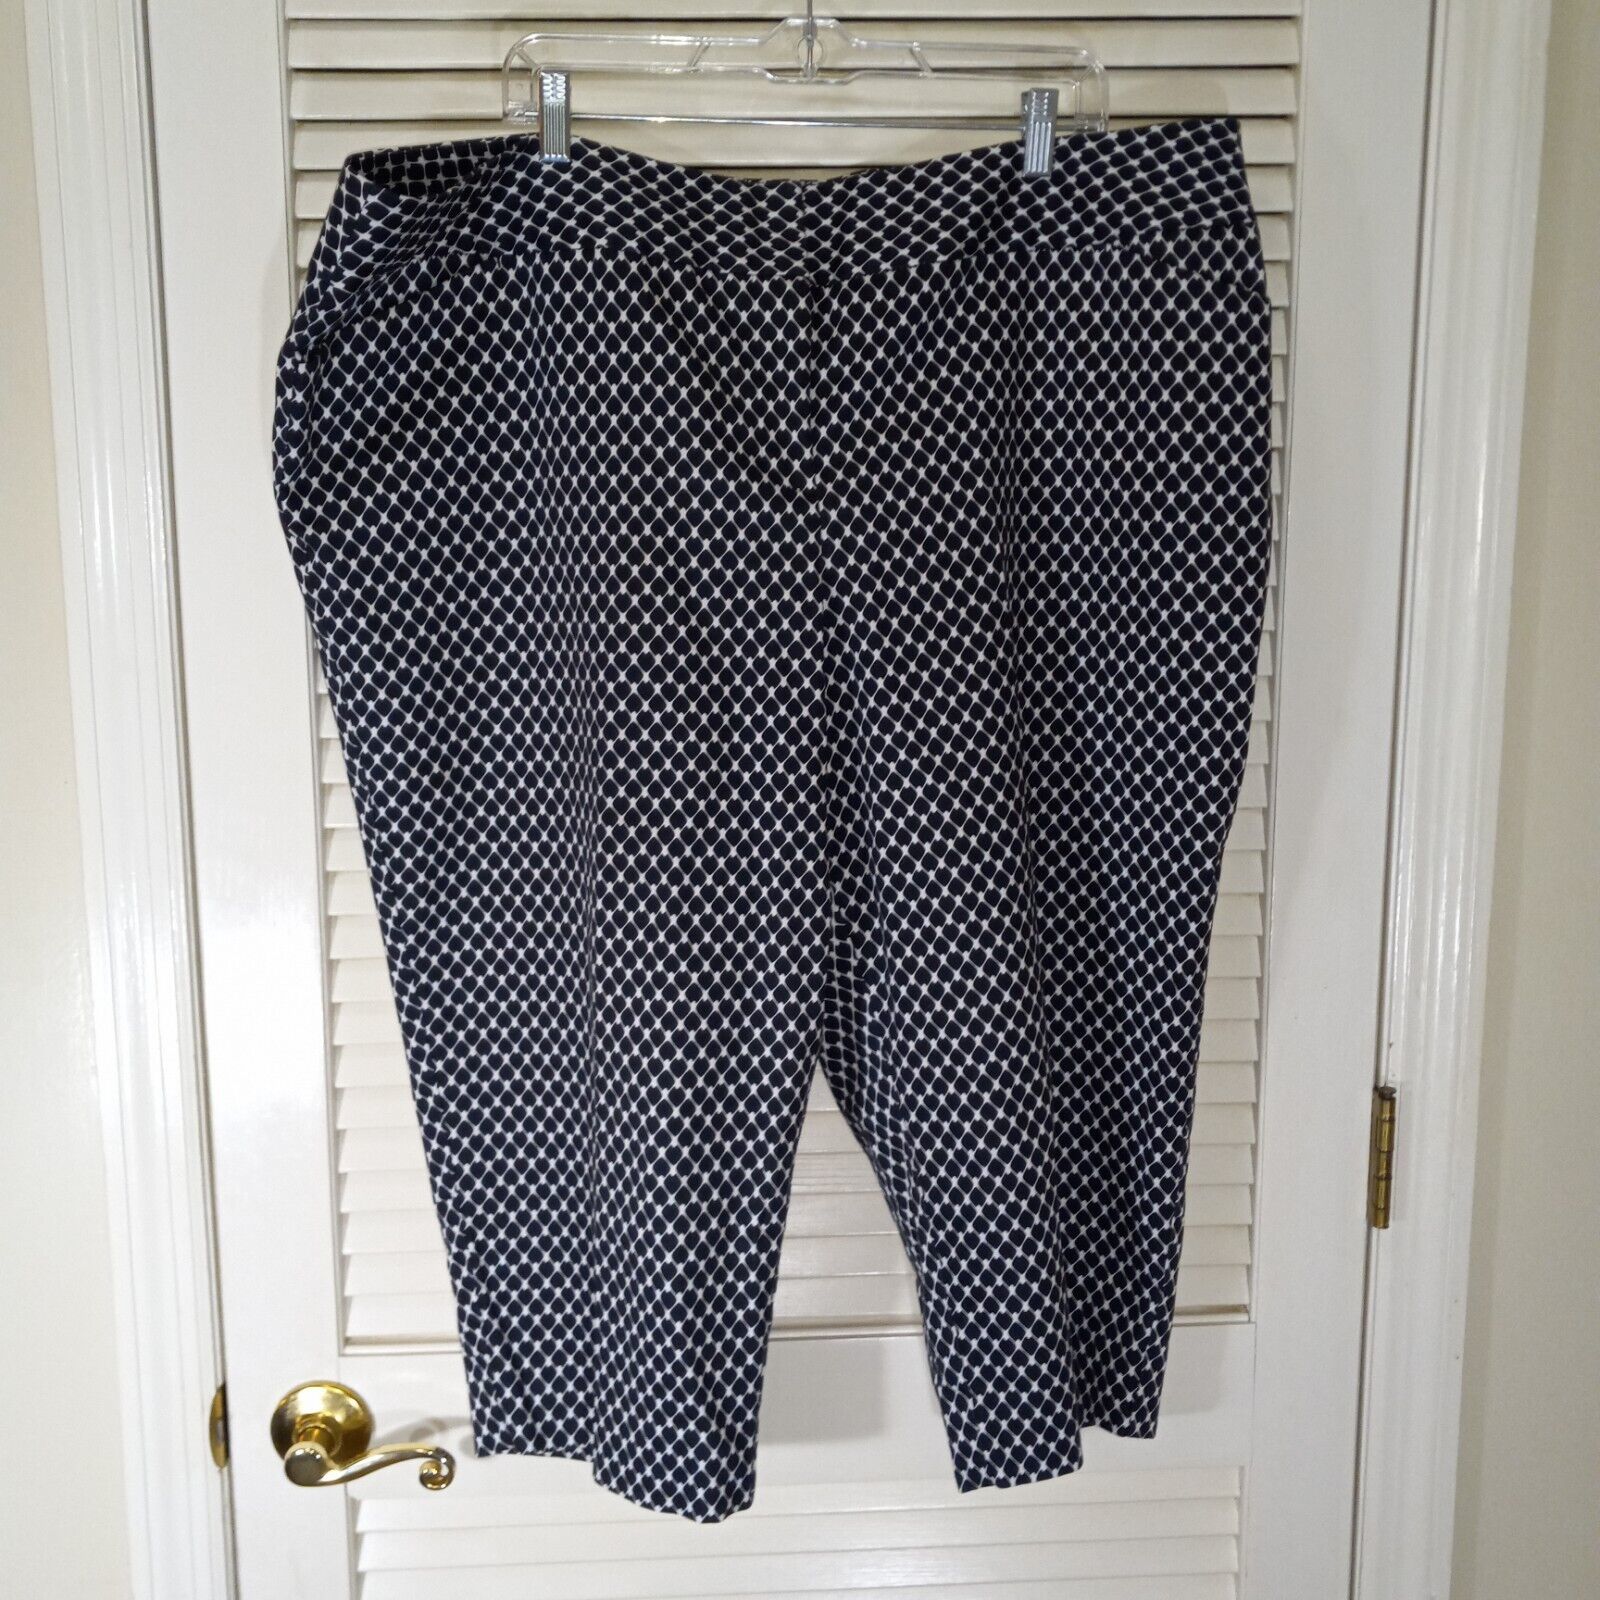 Worthington Capri Modern Fit Pants Size 24W and 50 similar items